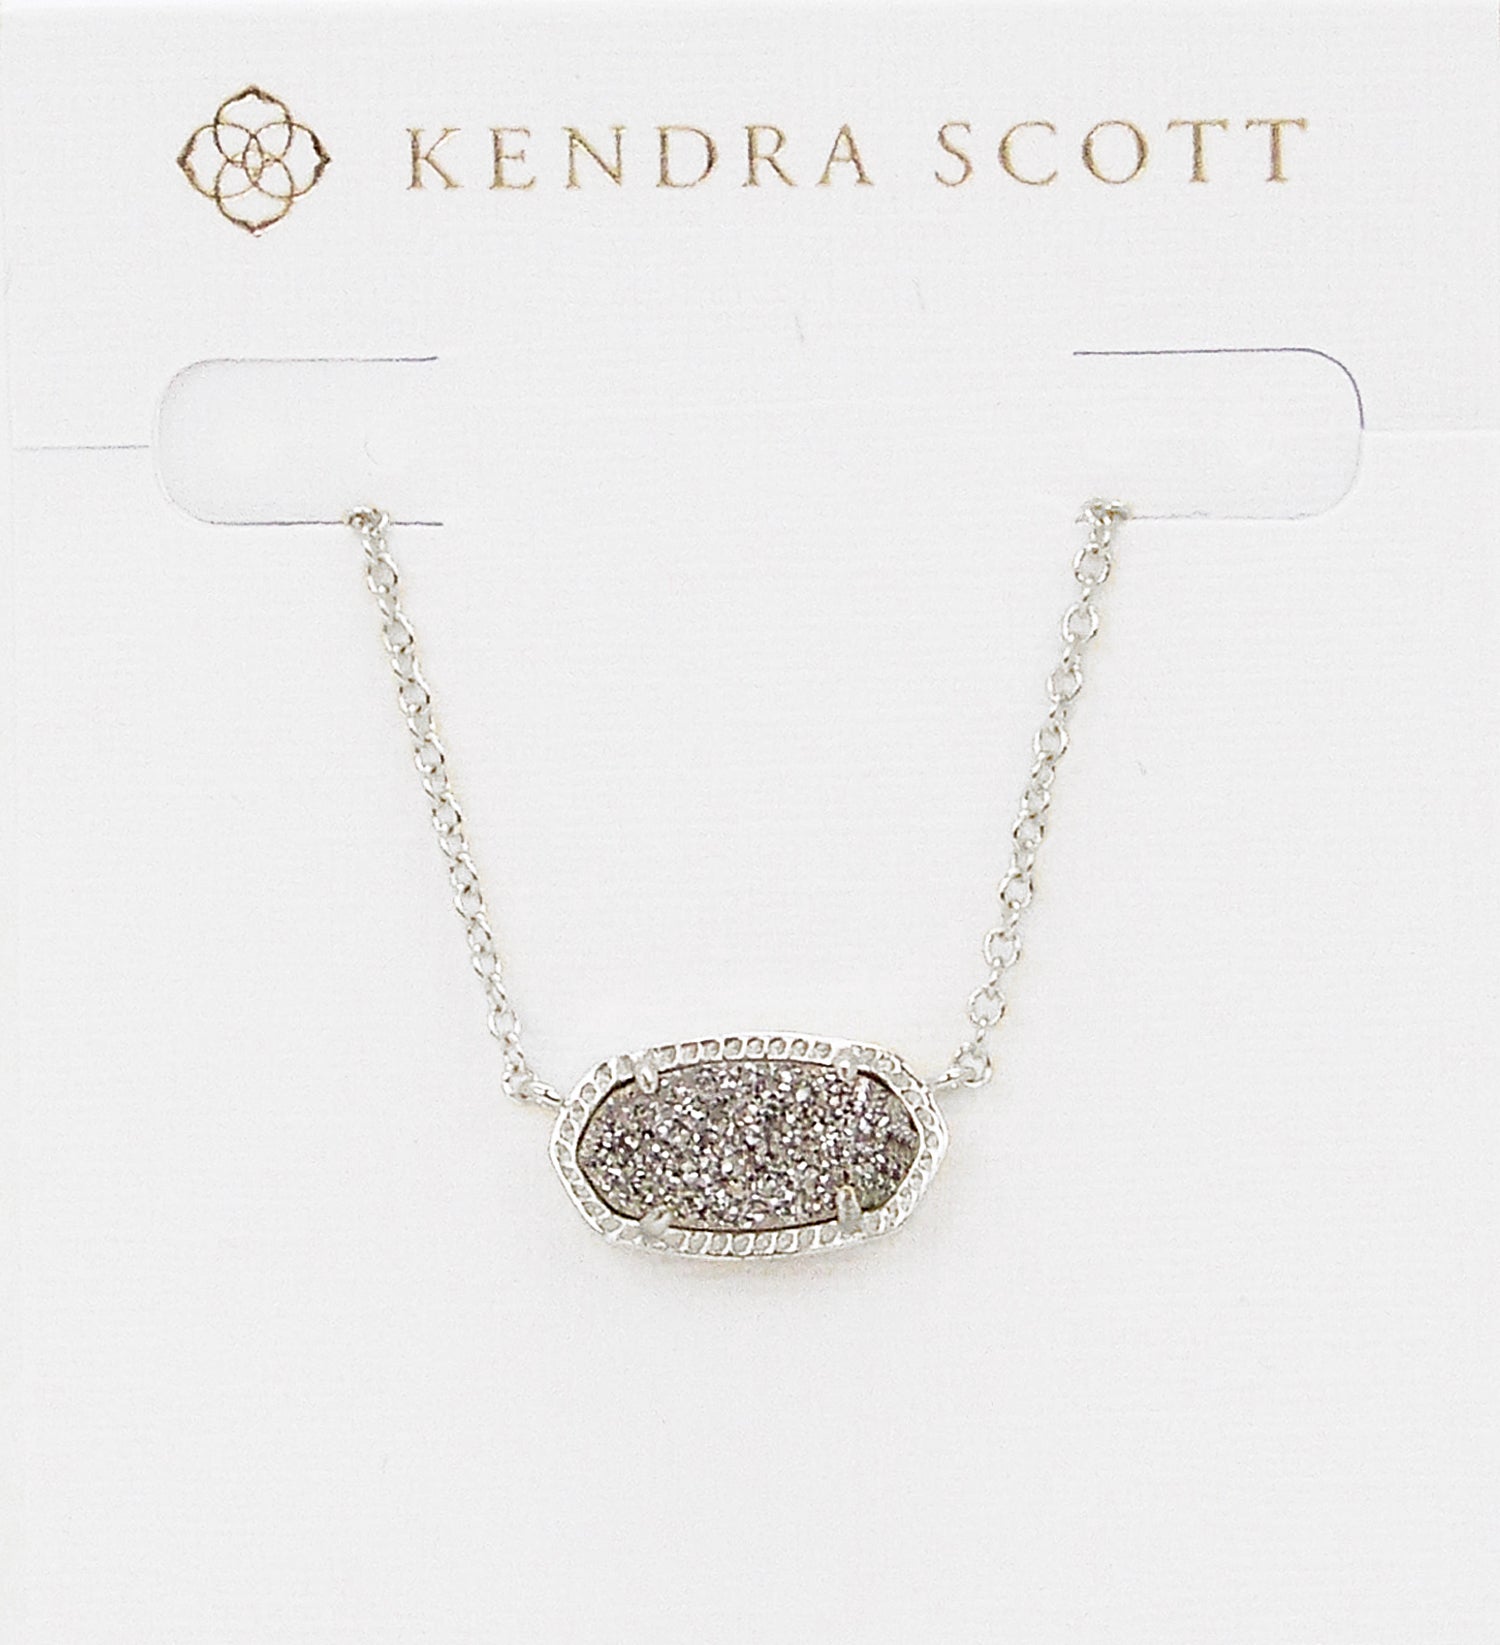 Kendra Scott Elisa Oval Pendant Necklace in Platinum Drusy and Rhodium